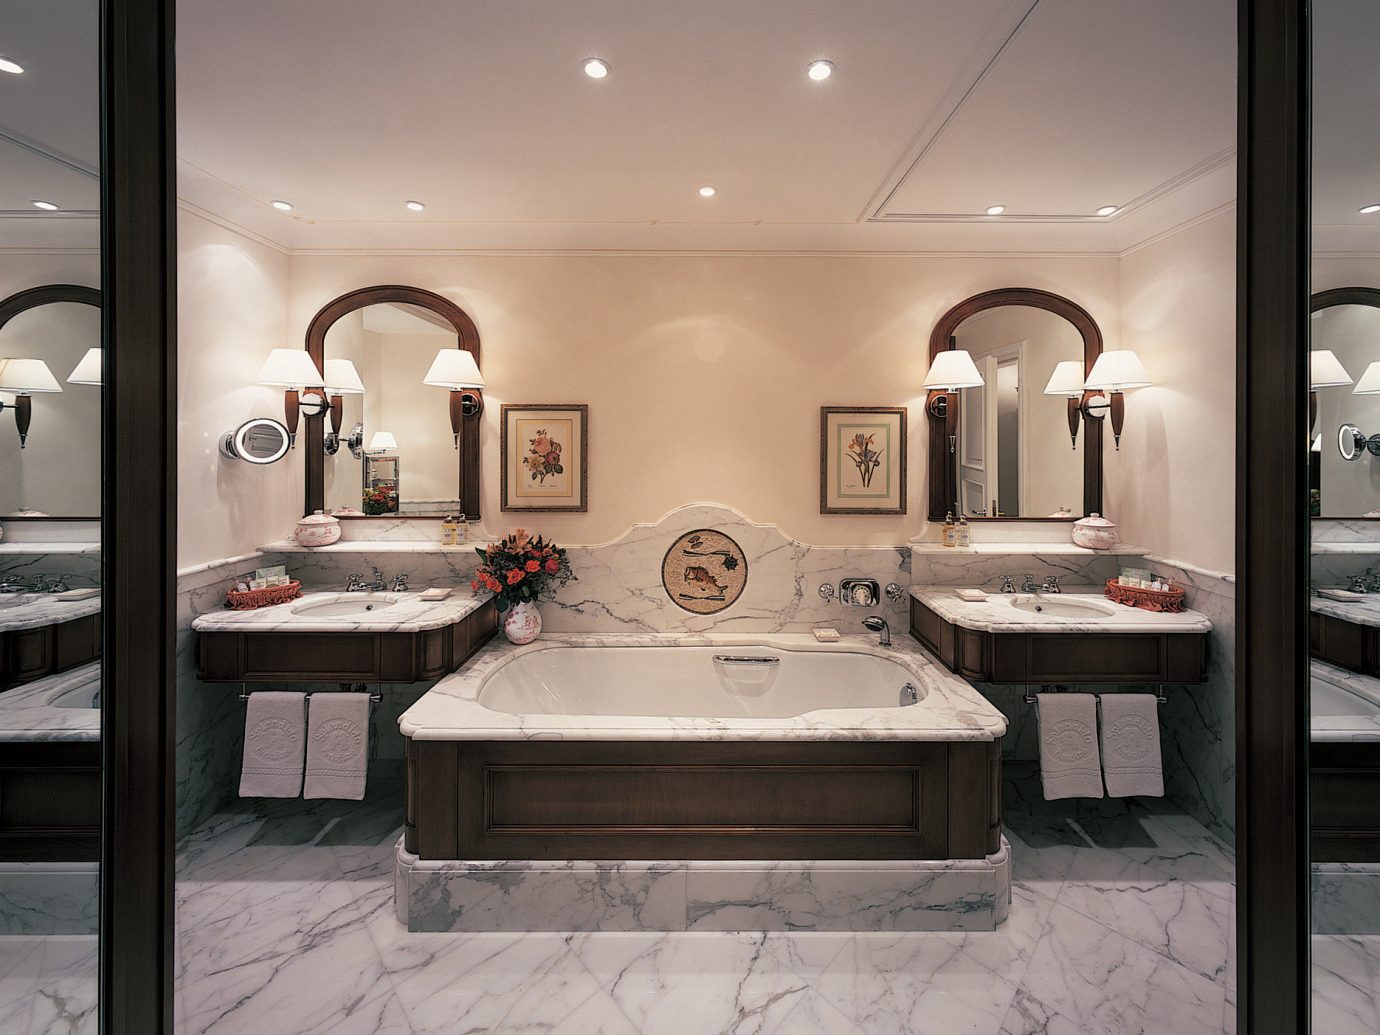 Italy Trip Ideas wall indoor room interior design bathroom ceiling floor sink flooring countertop estate interior designer Suite toilet